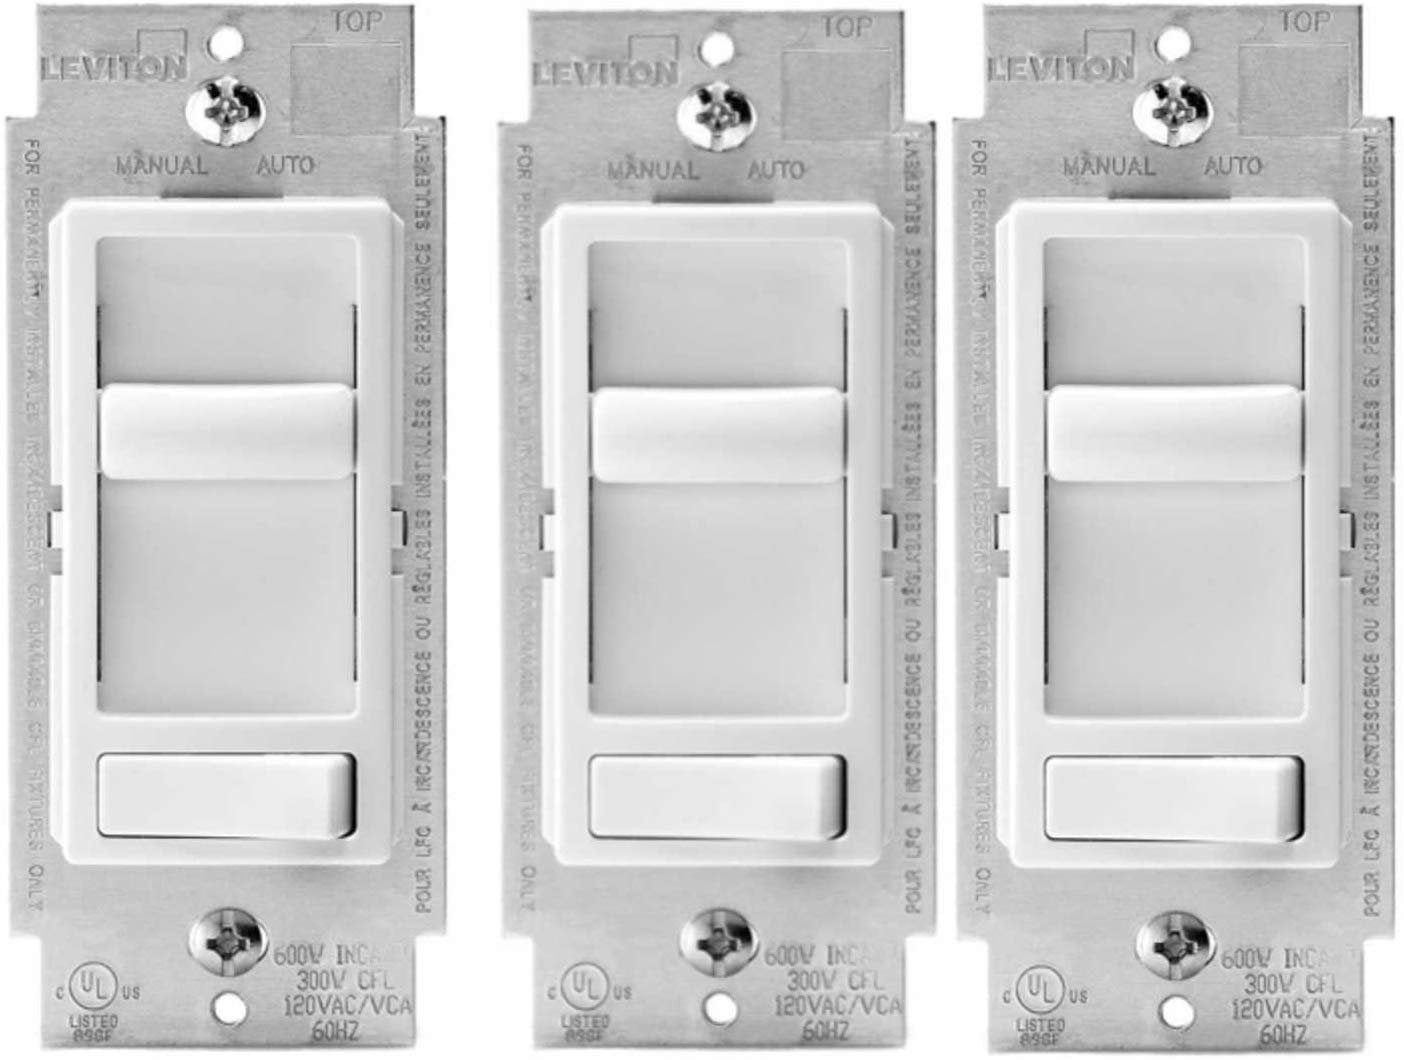 10 Leviton VZM10-1LW 1000 W Vizia Dimmer Switch White Kit GREAT FOR LED LIGHT 